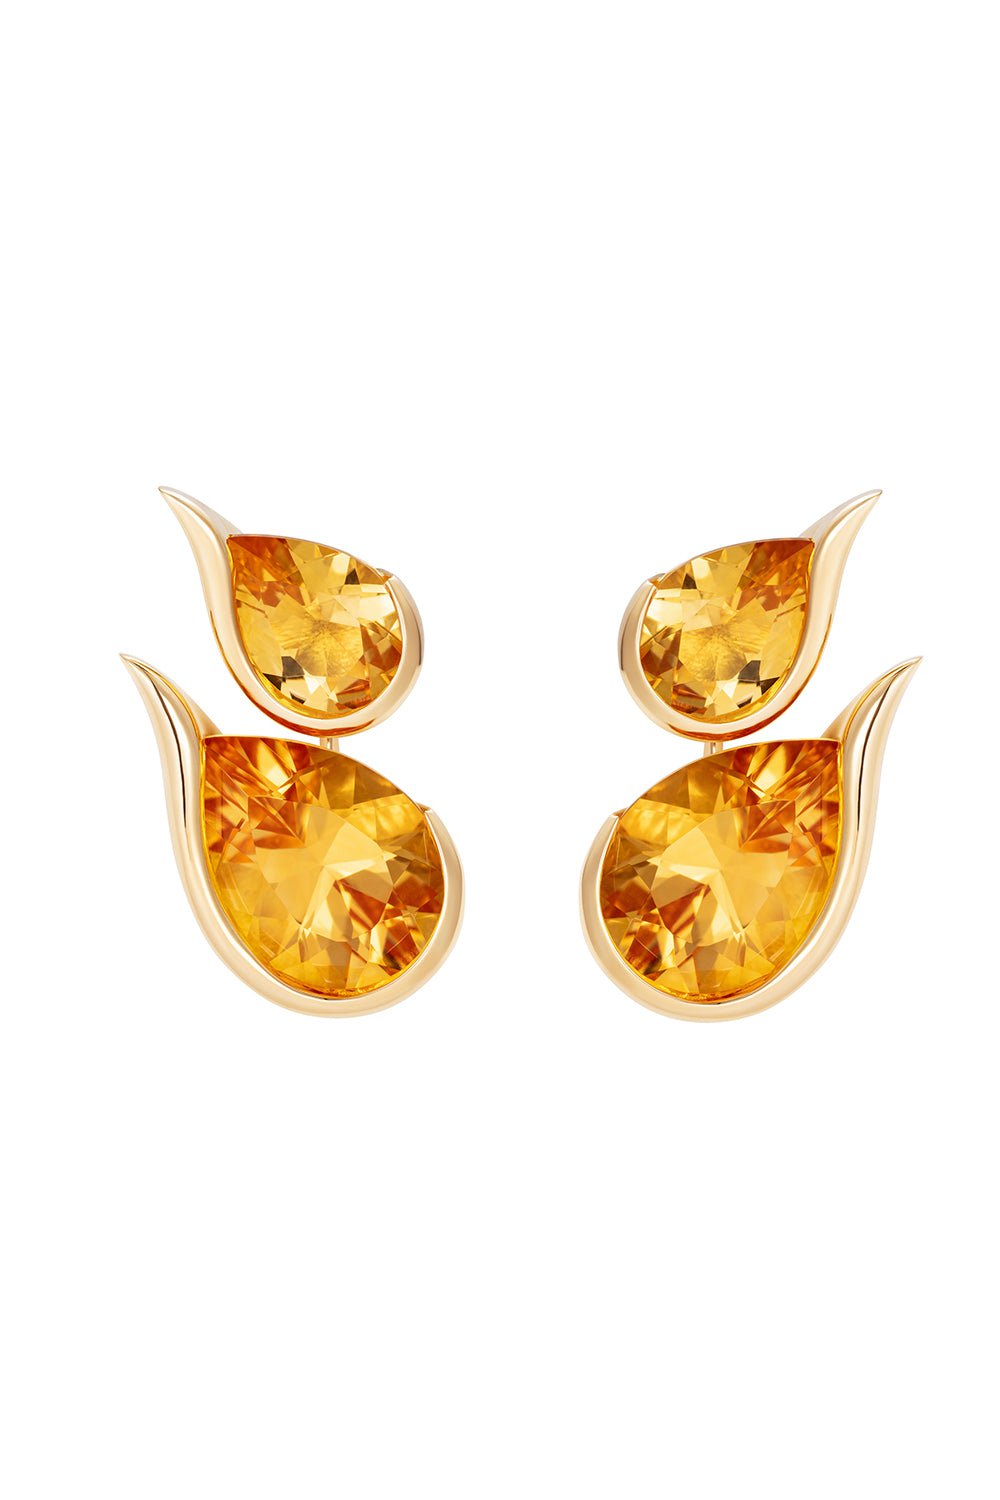 FERNANDO JORGE-Ignite Double Earrings-YELLOW GOLD